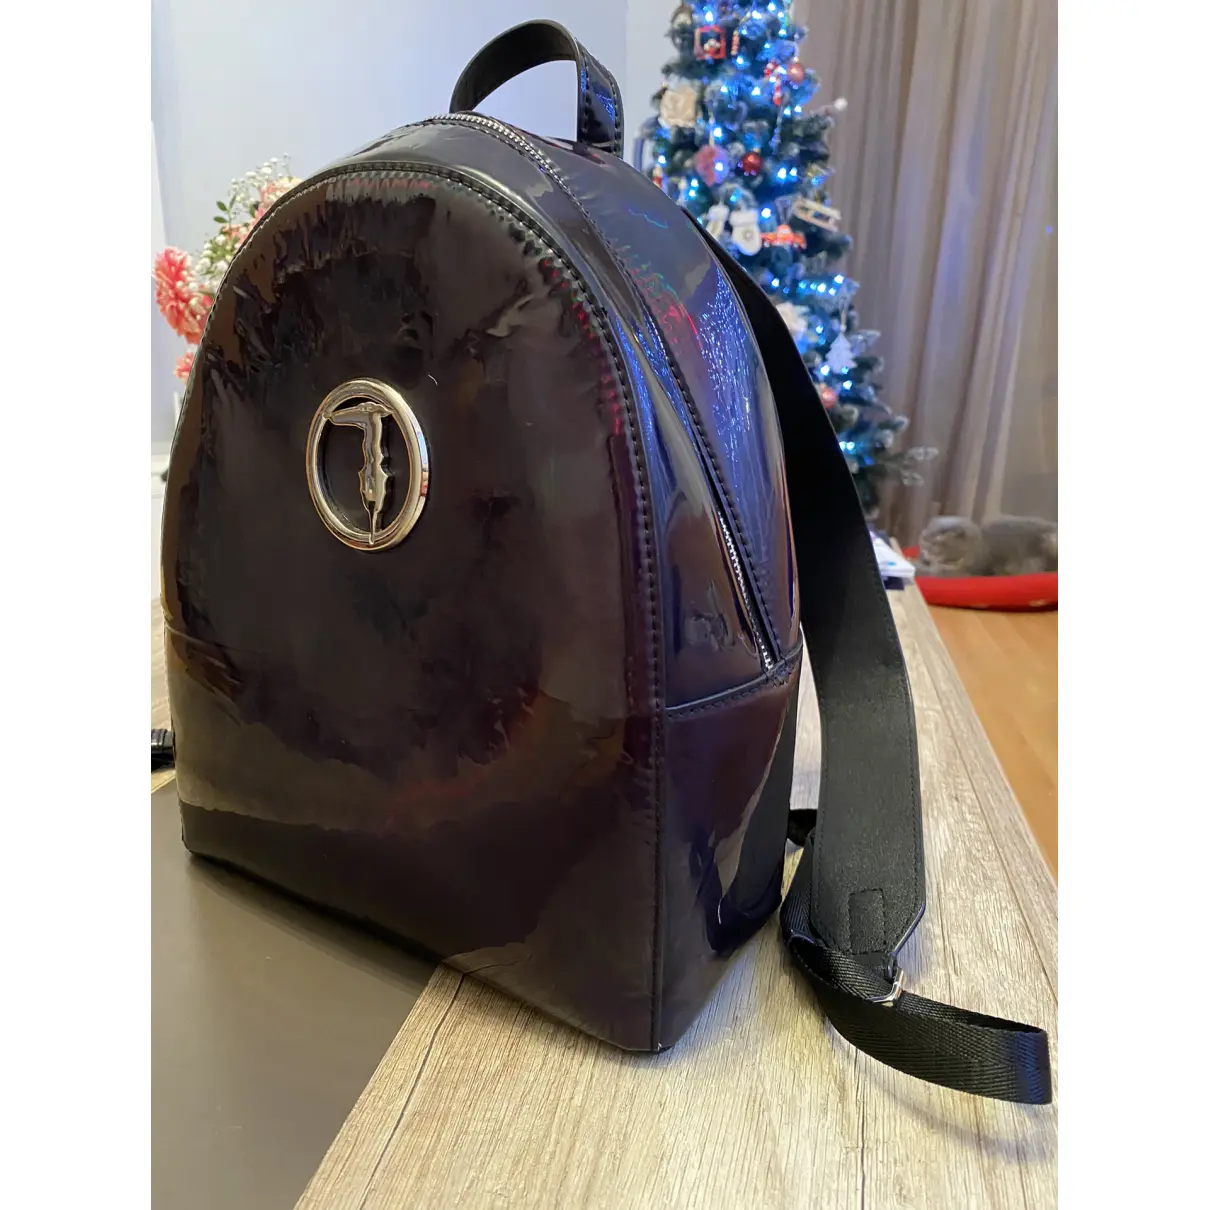 Buy Trussardi Leather backpack online